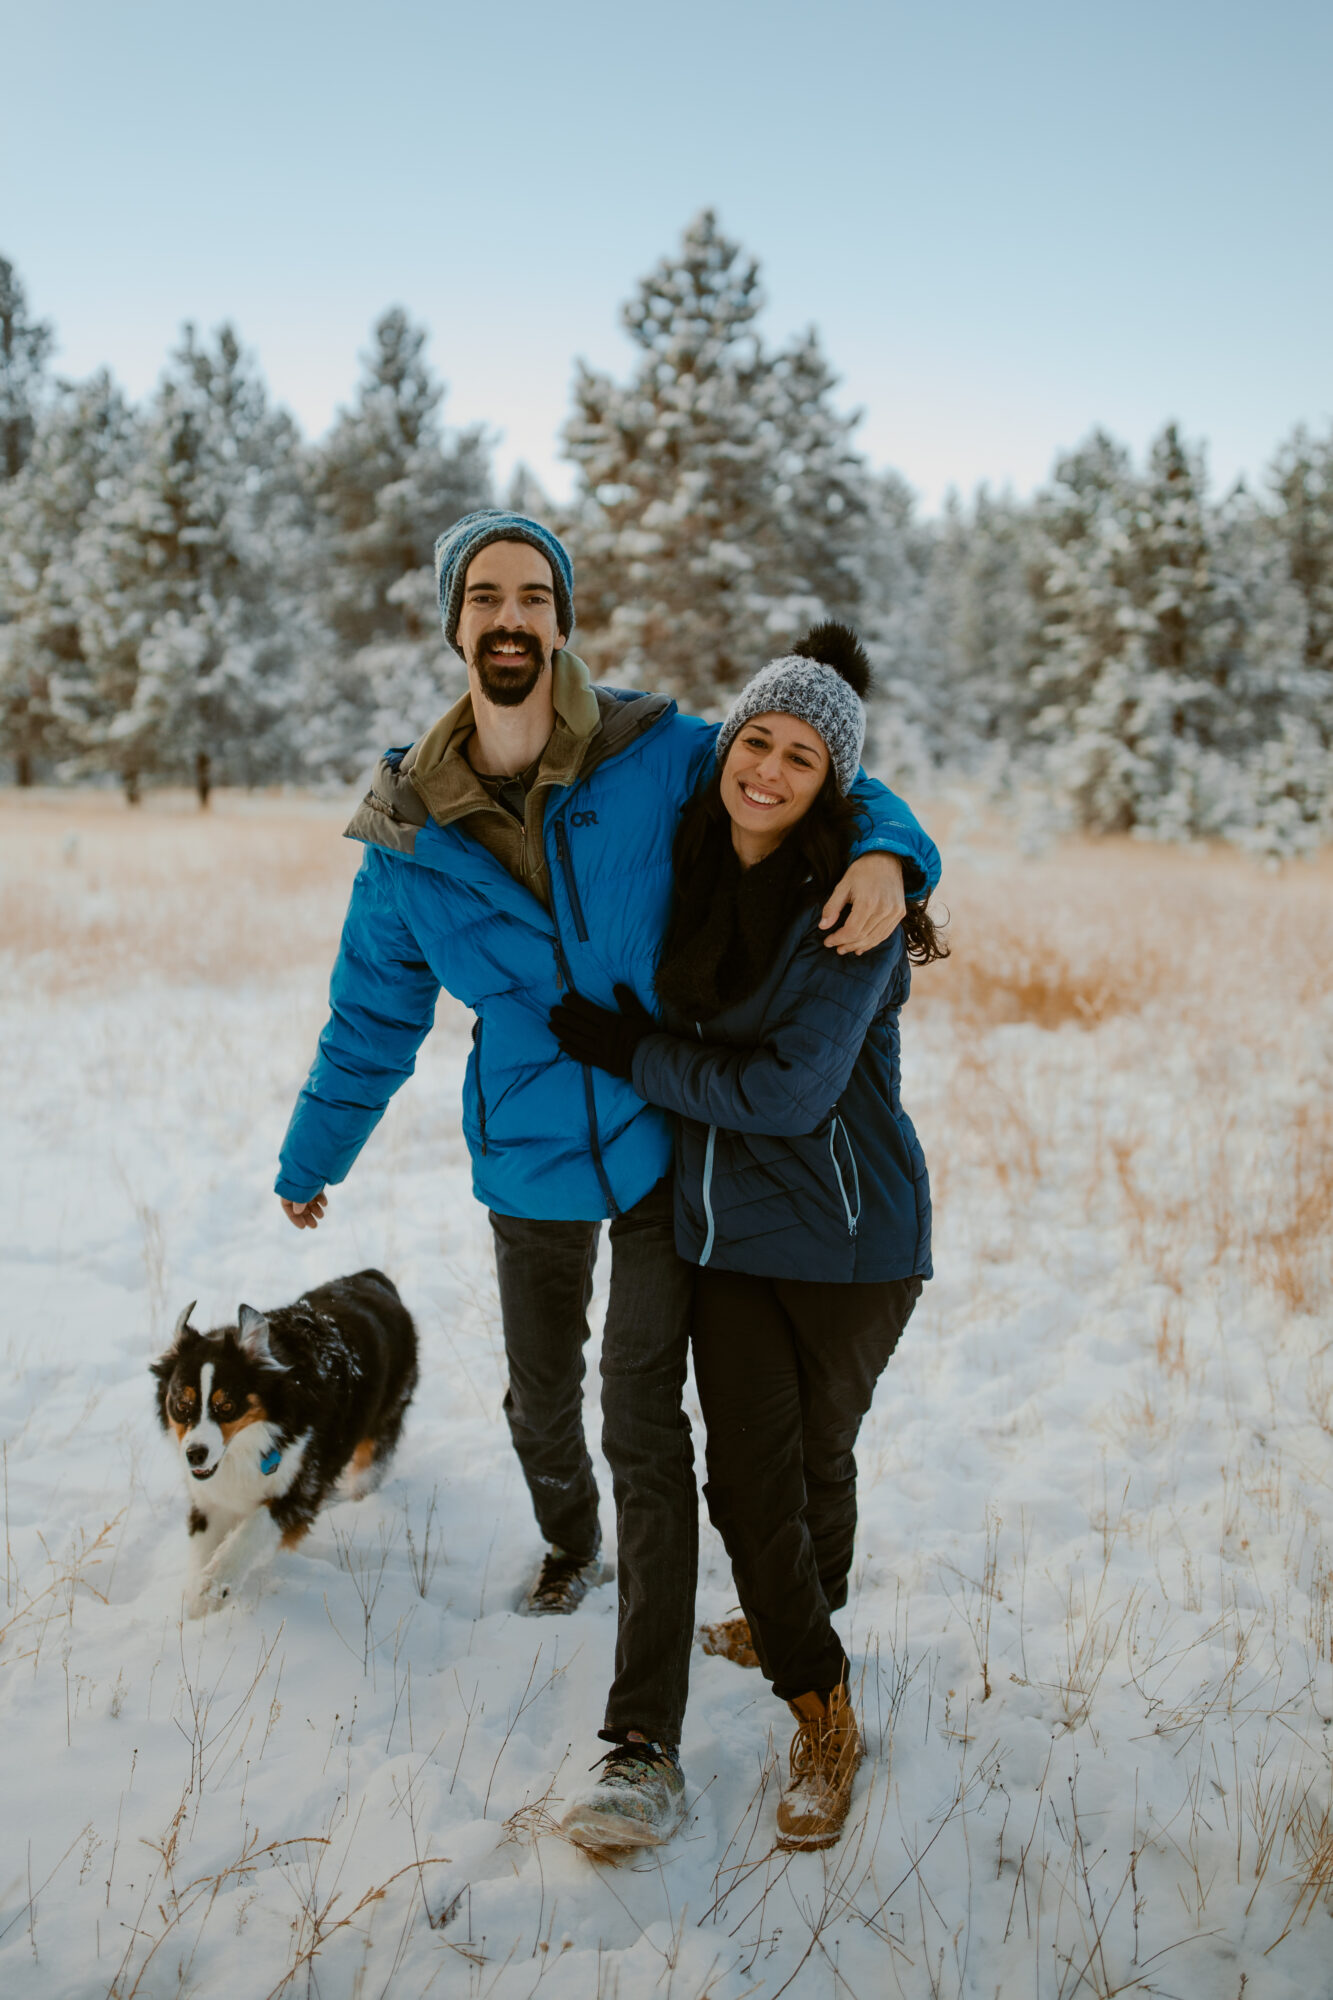 Winter Couples Photoshoot In Colorado